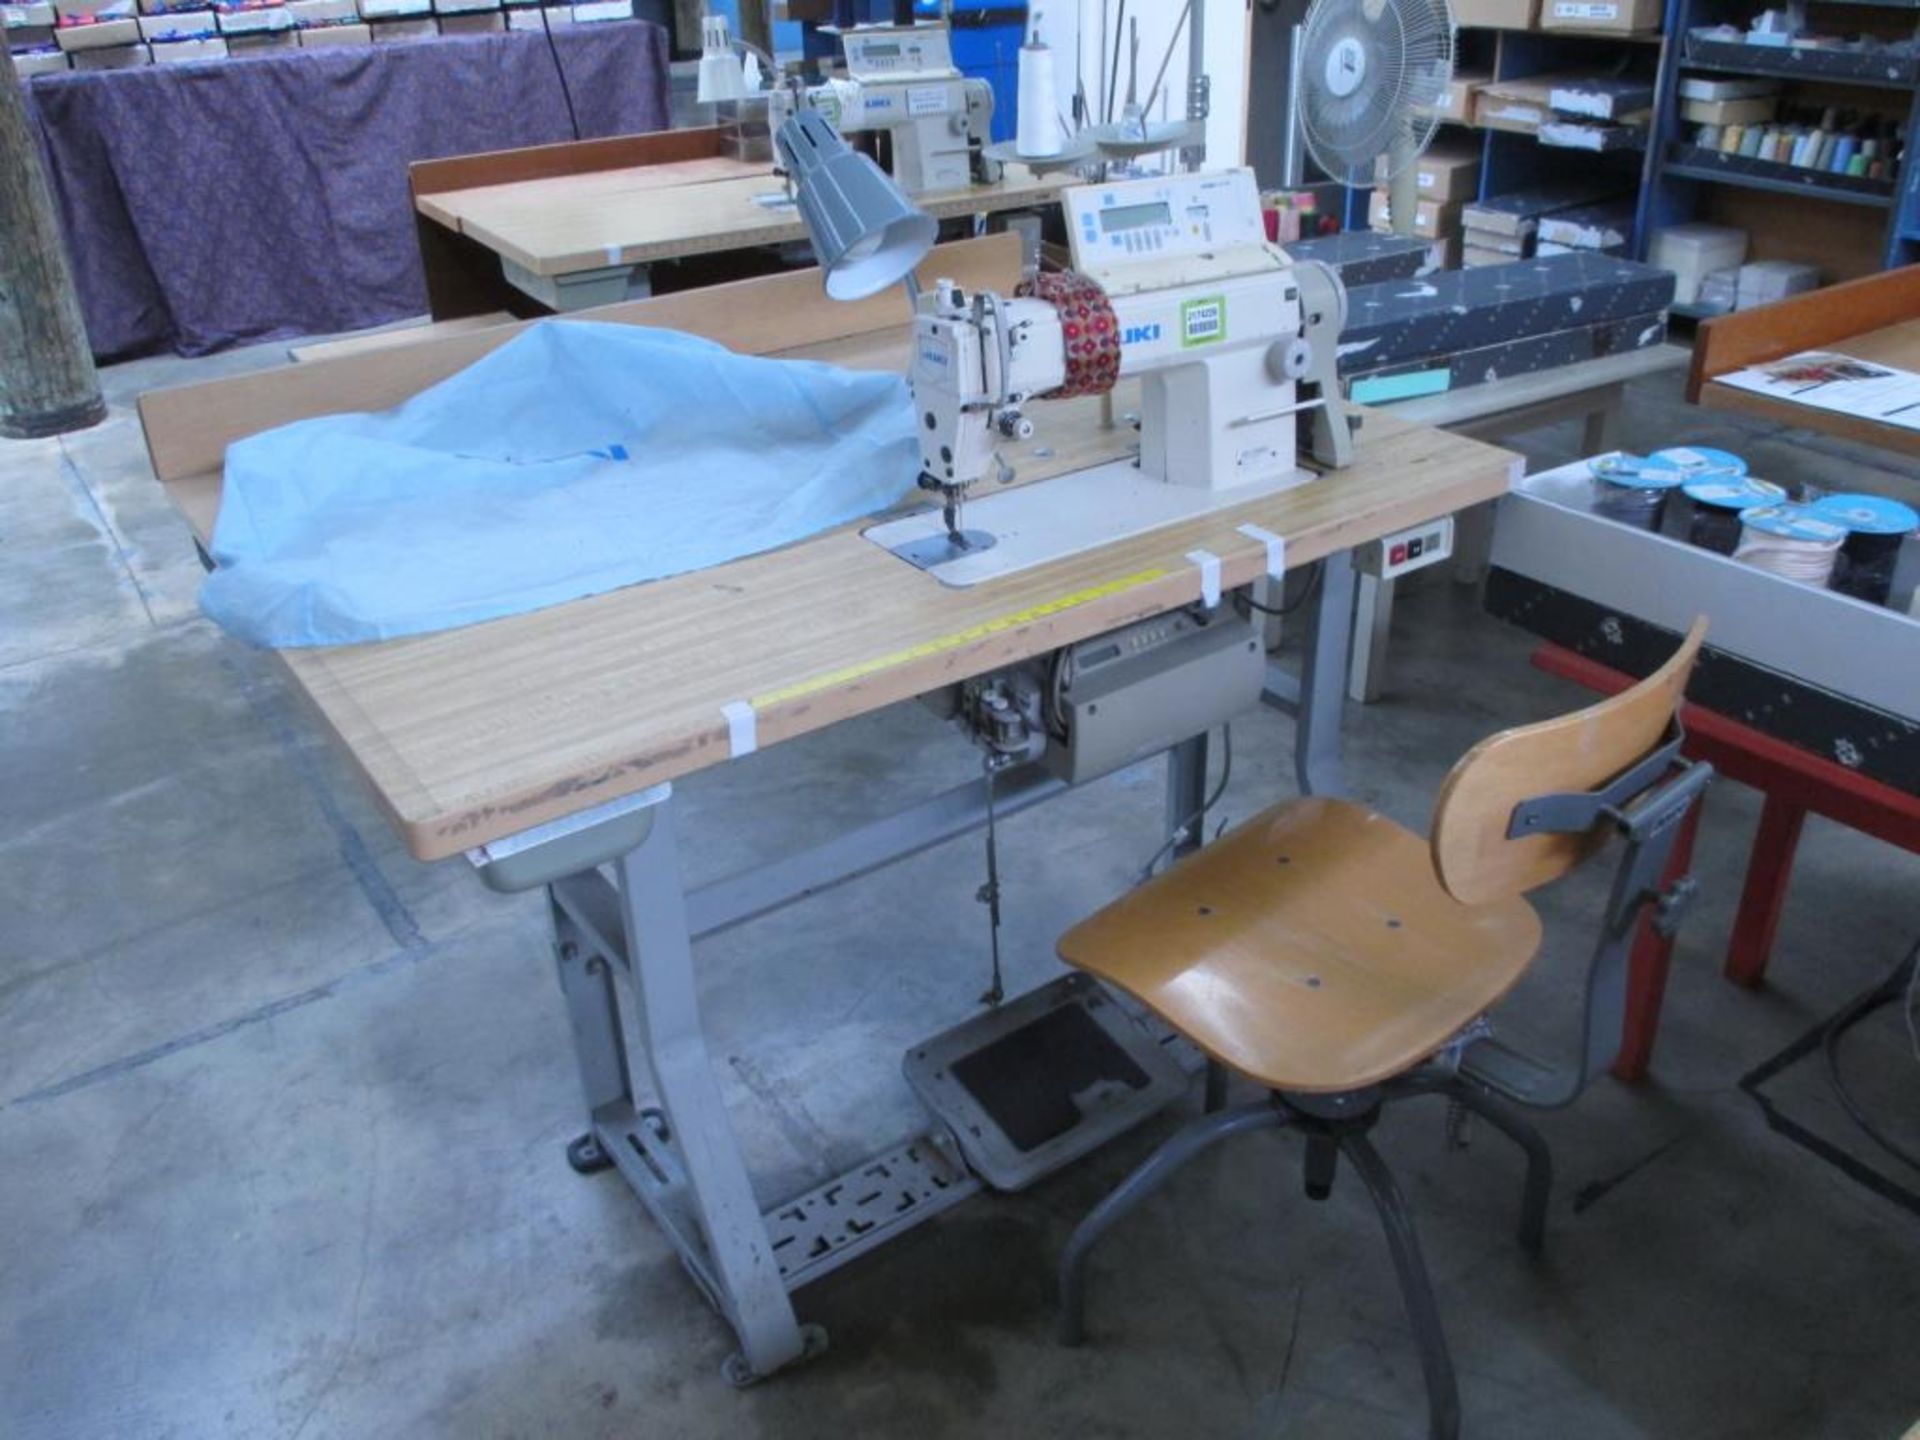 Lockstitch Reverse Industrial Sewing Machine. Juki DDL-5550N-7 1-Needle Lockstitch Reverse